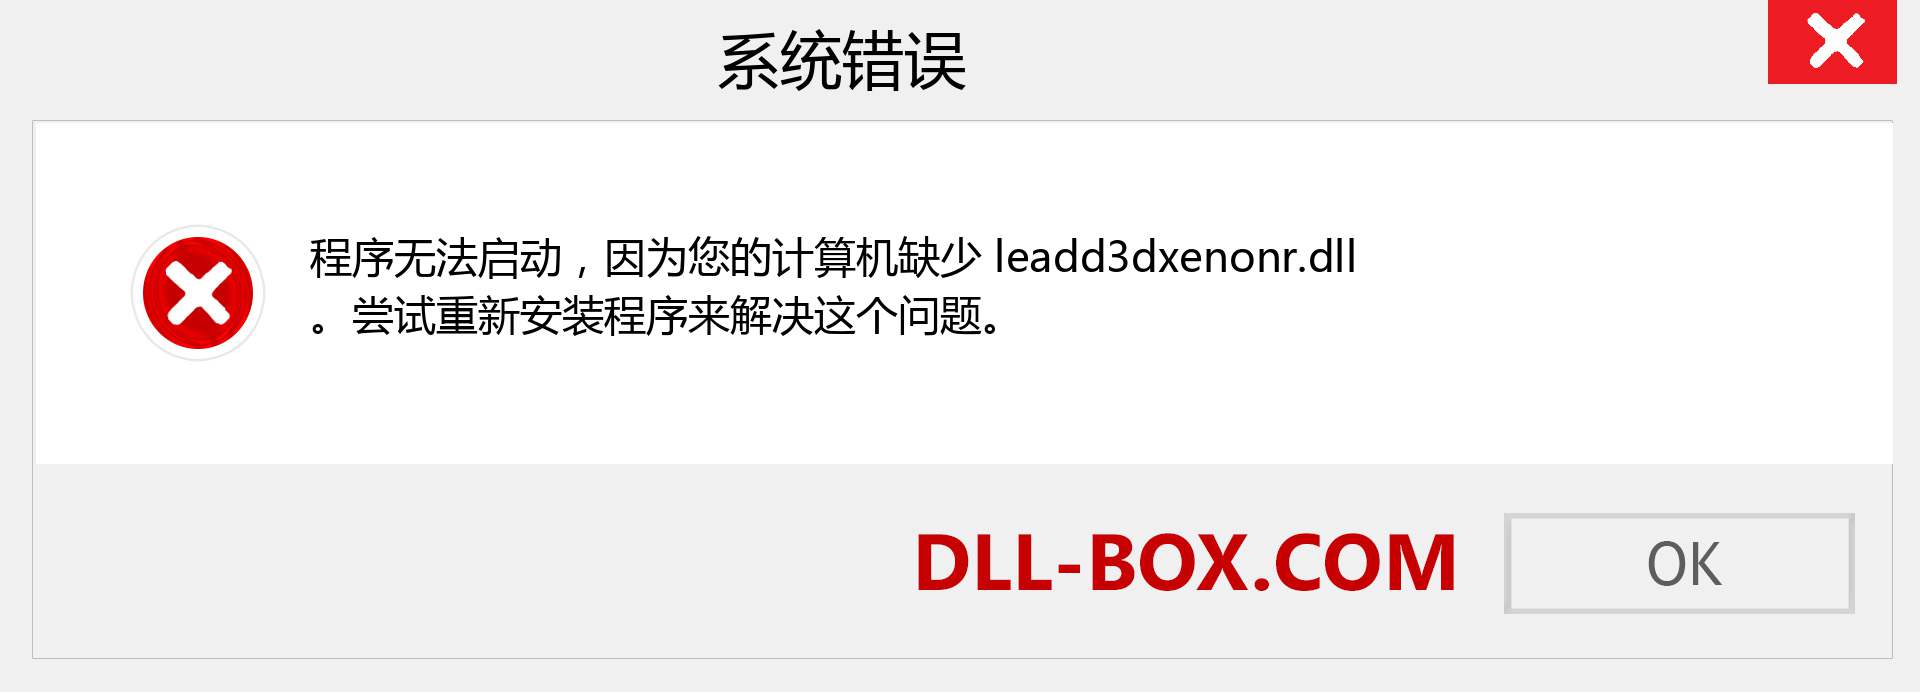 leadd3dxenonr.dll 文件丢失？。 适用于 Windows 7、8、10 的下载 - 修复 Windows、照片、图像上的 leadd3dxenonr dll 丢失错误